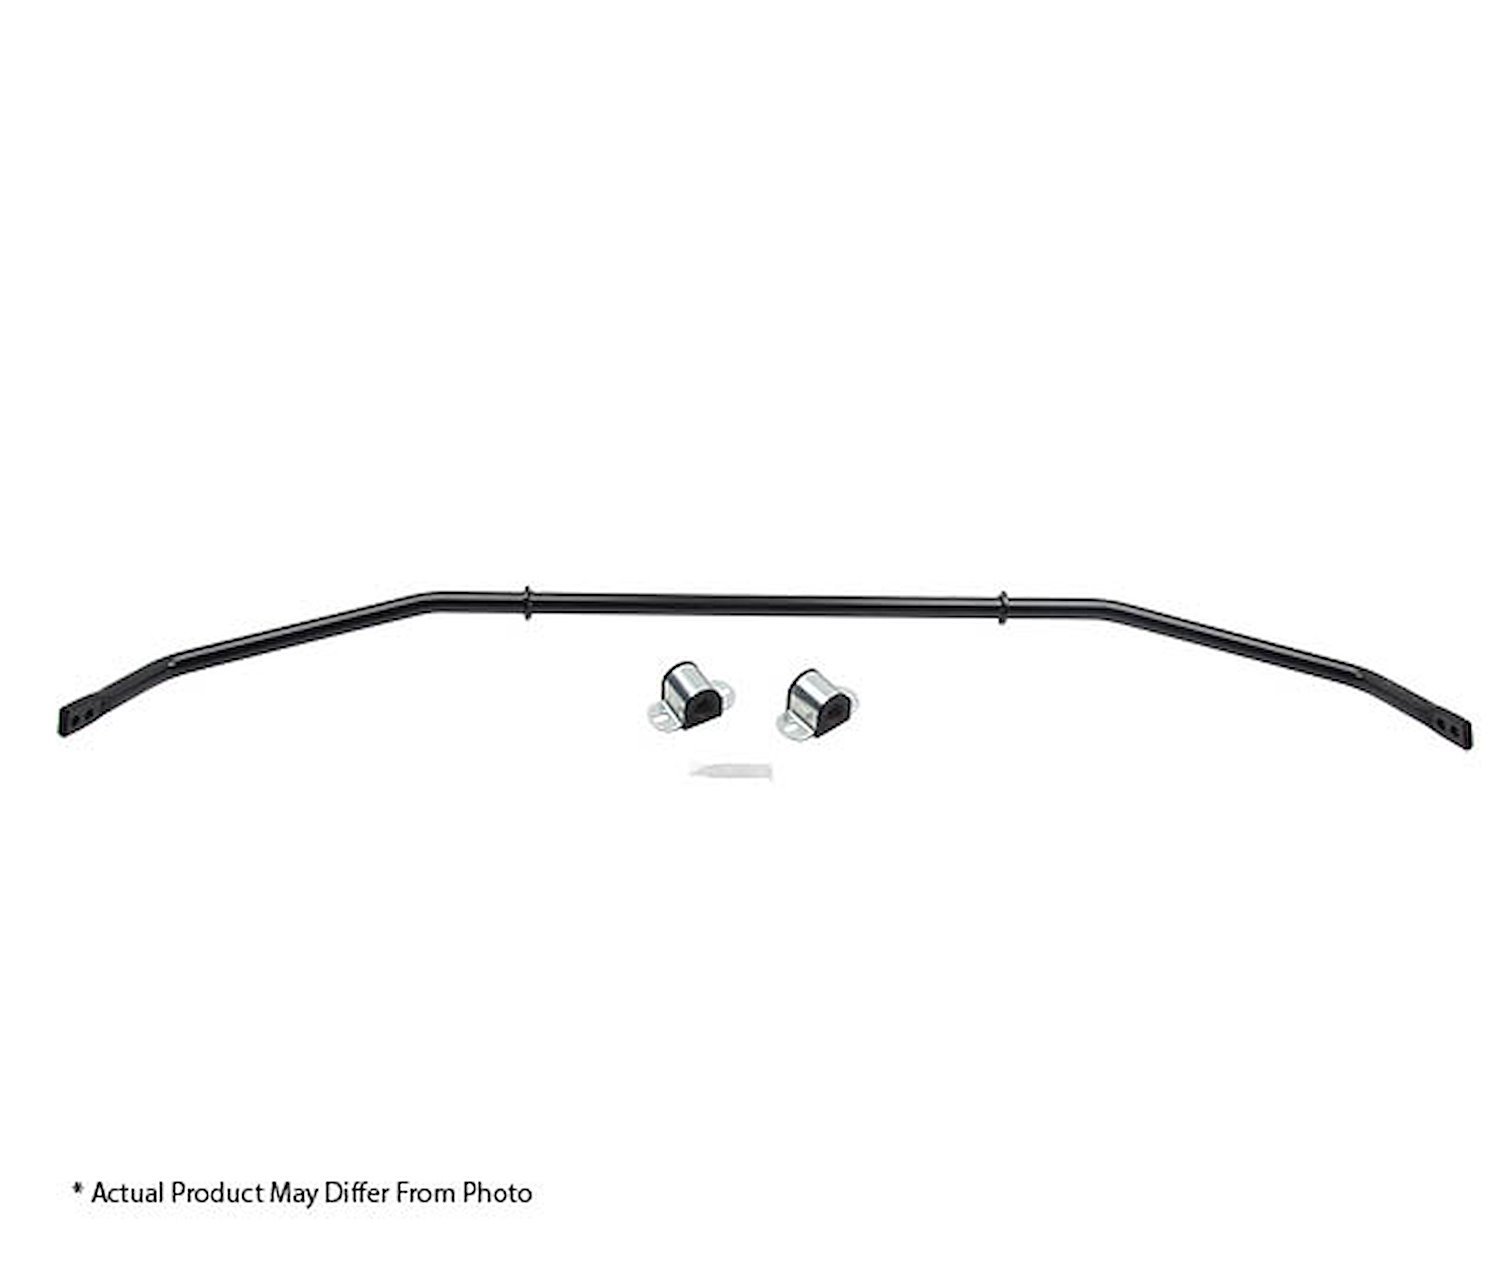 51305 Anti-Swaybar - Rear for 07-13 Mini Cooper R56 Hardtop